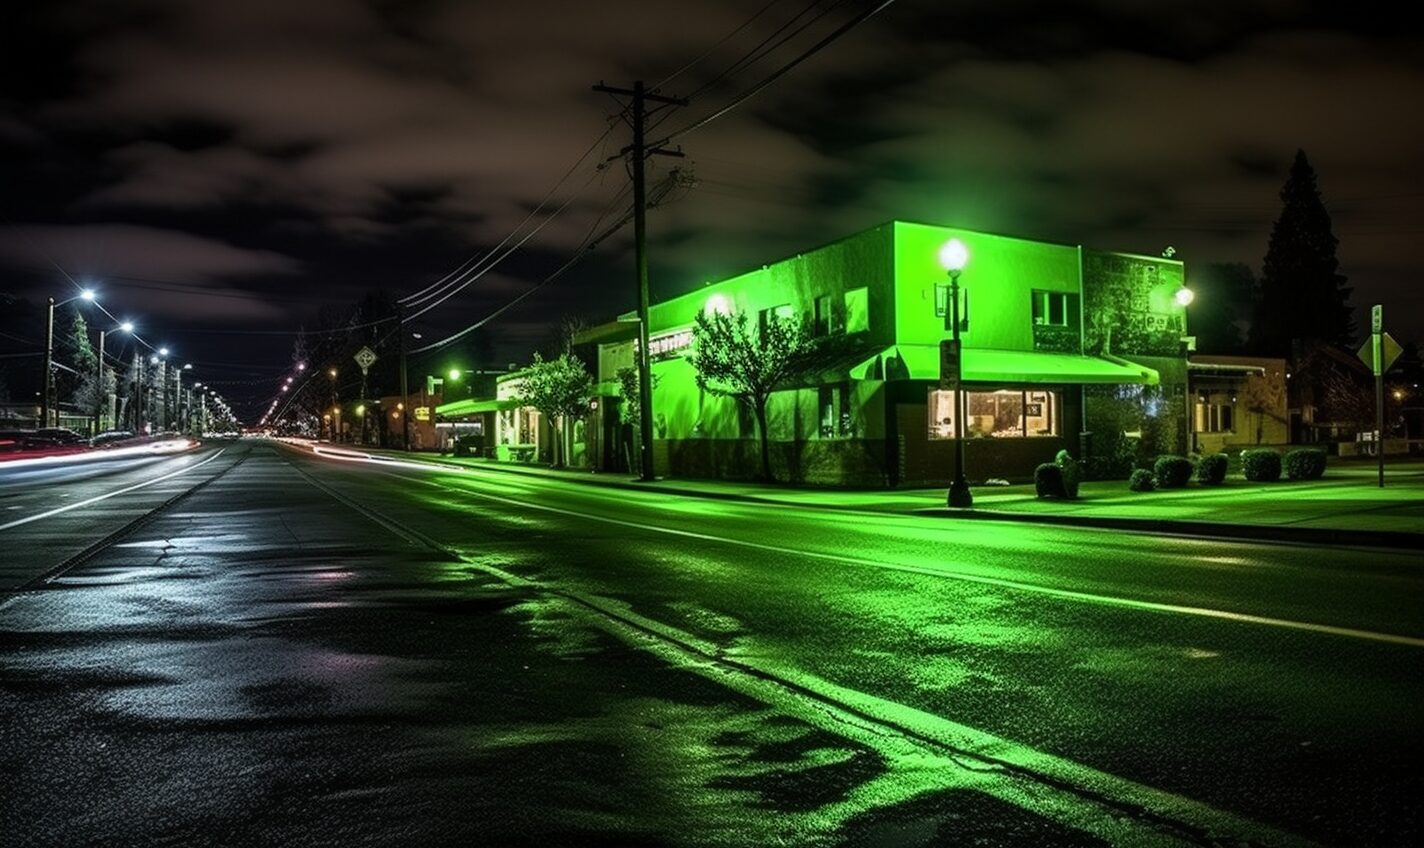 everett, washington in a black and neon green glow